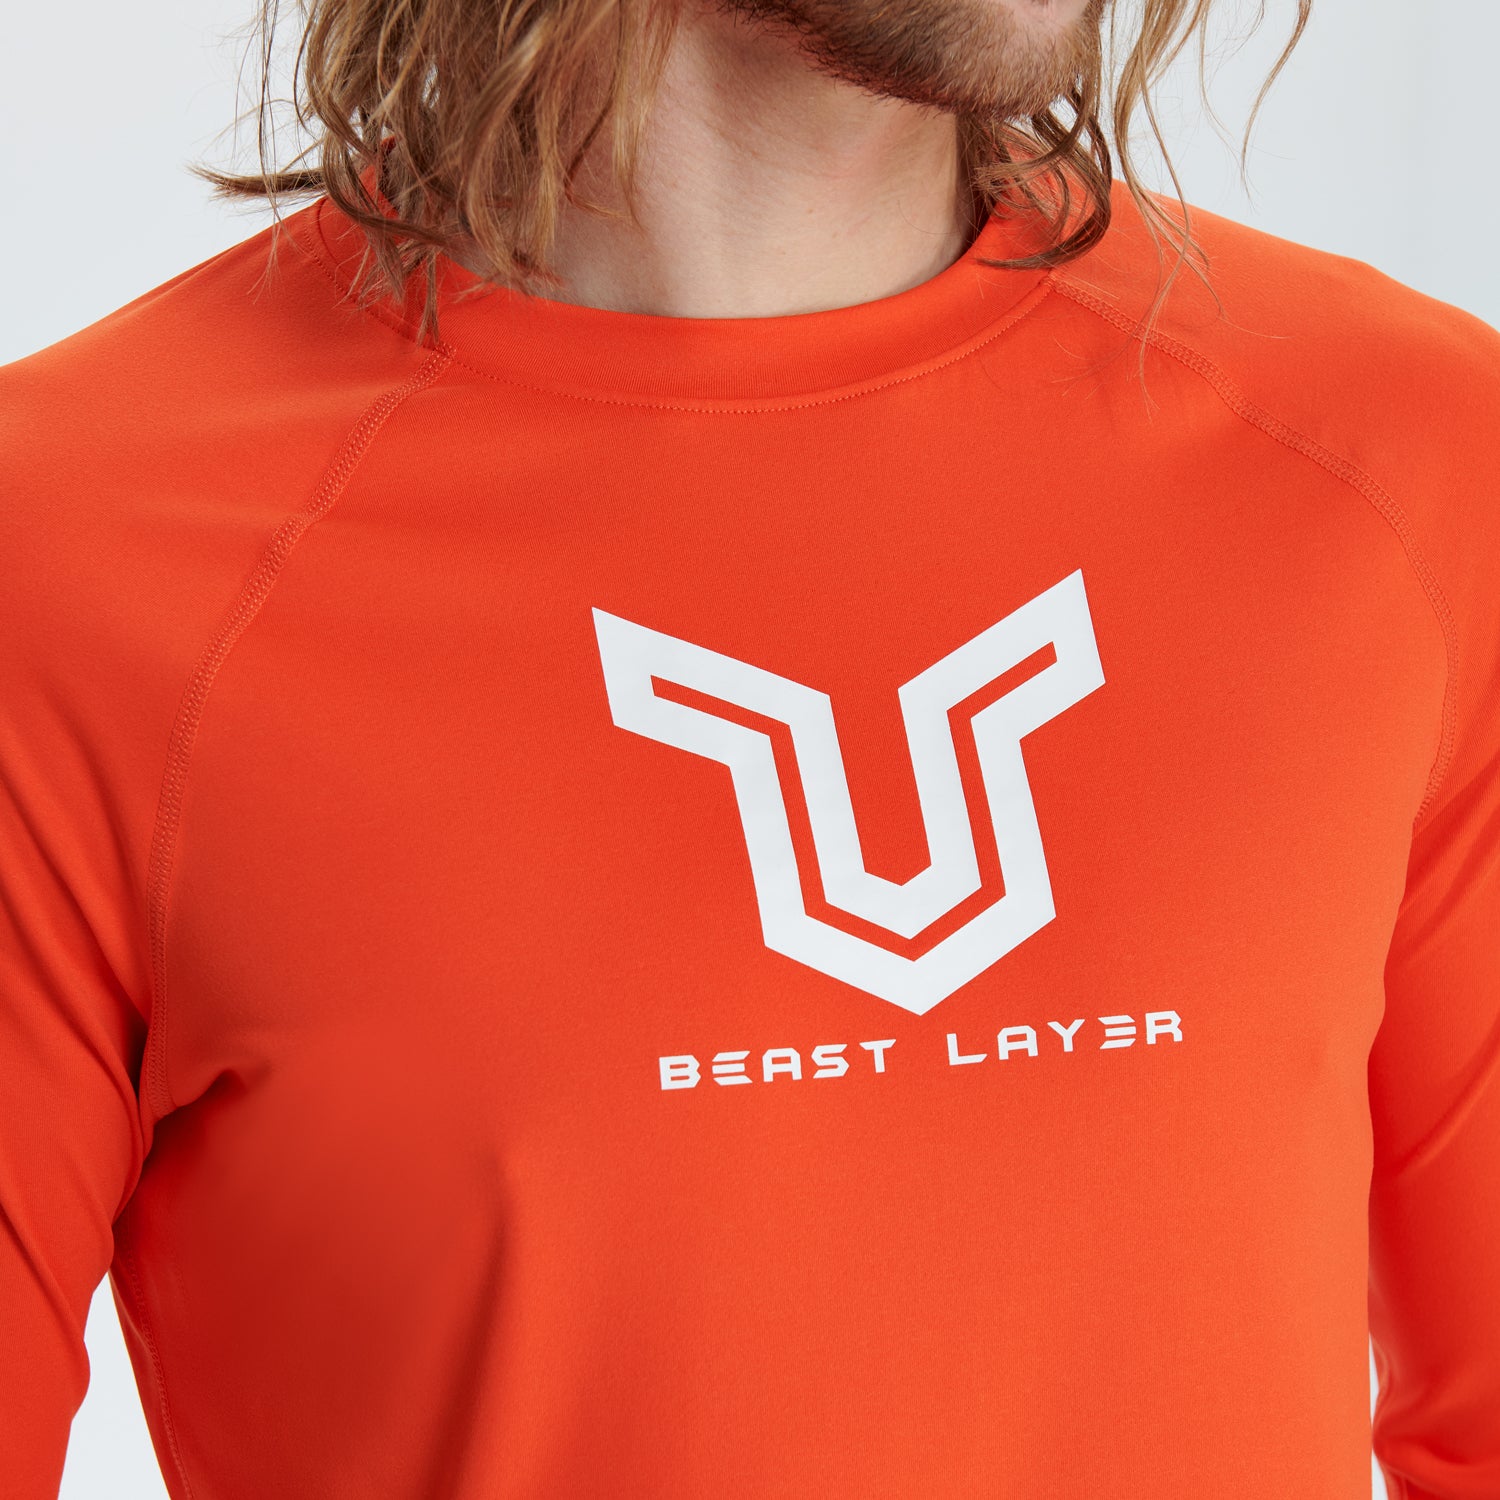 Beast Surf 衬衫 UPF50+ 男士防晒衣 - 橙色